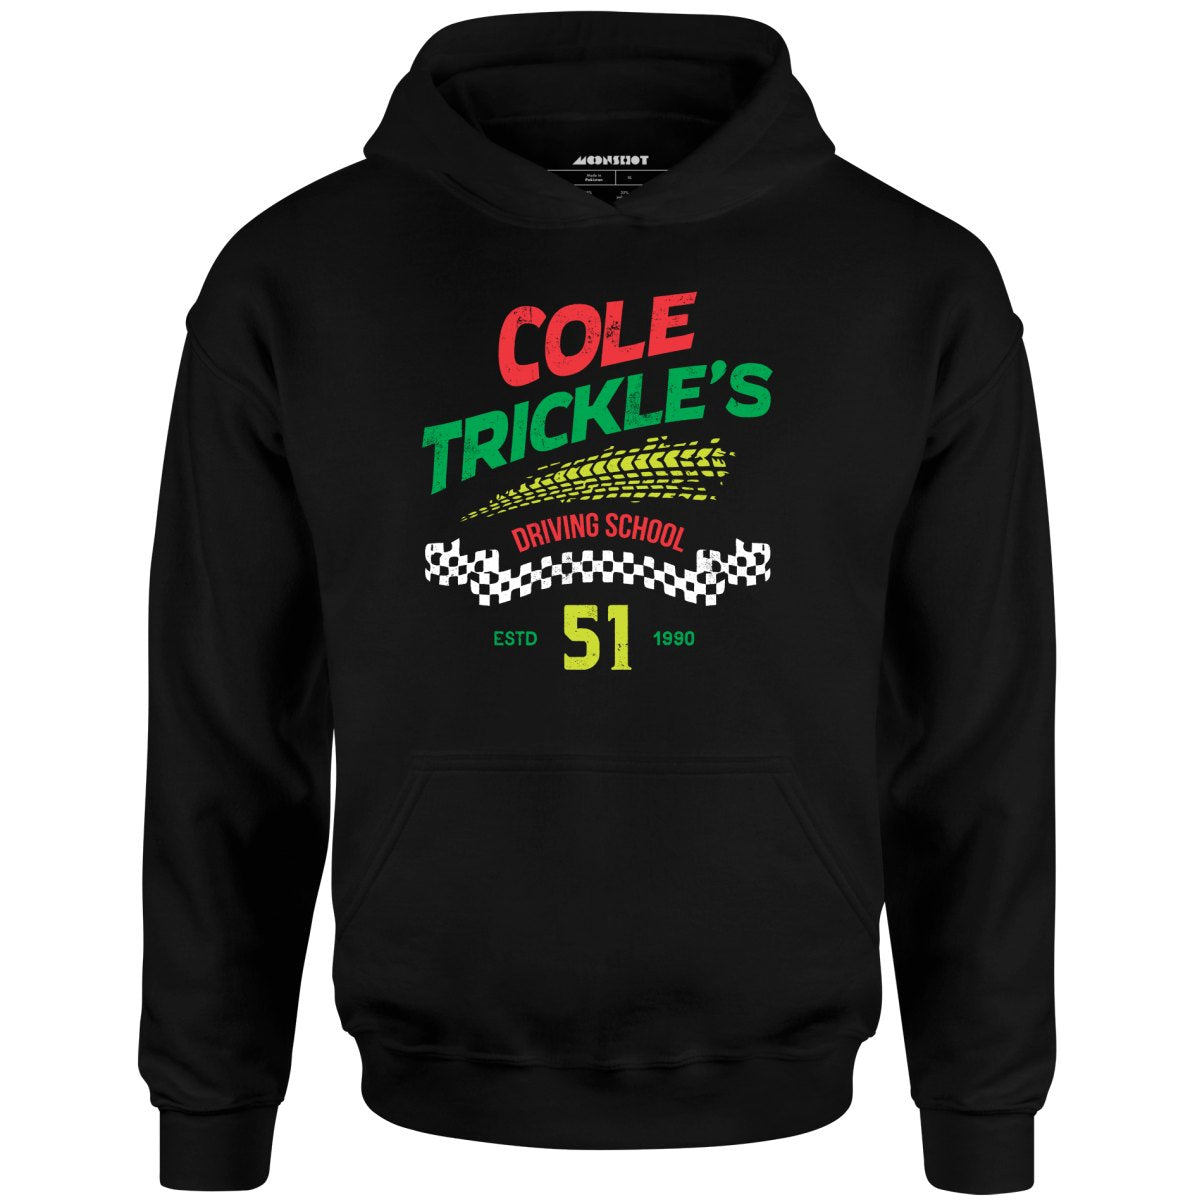 Cole Trickle's Driving School - Unisex Hoodie